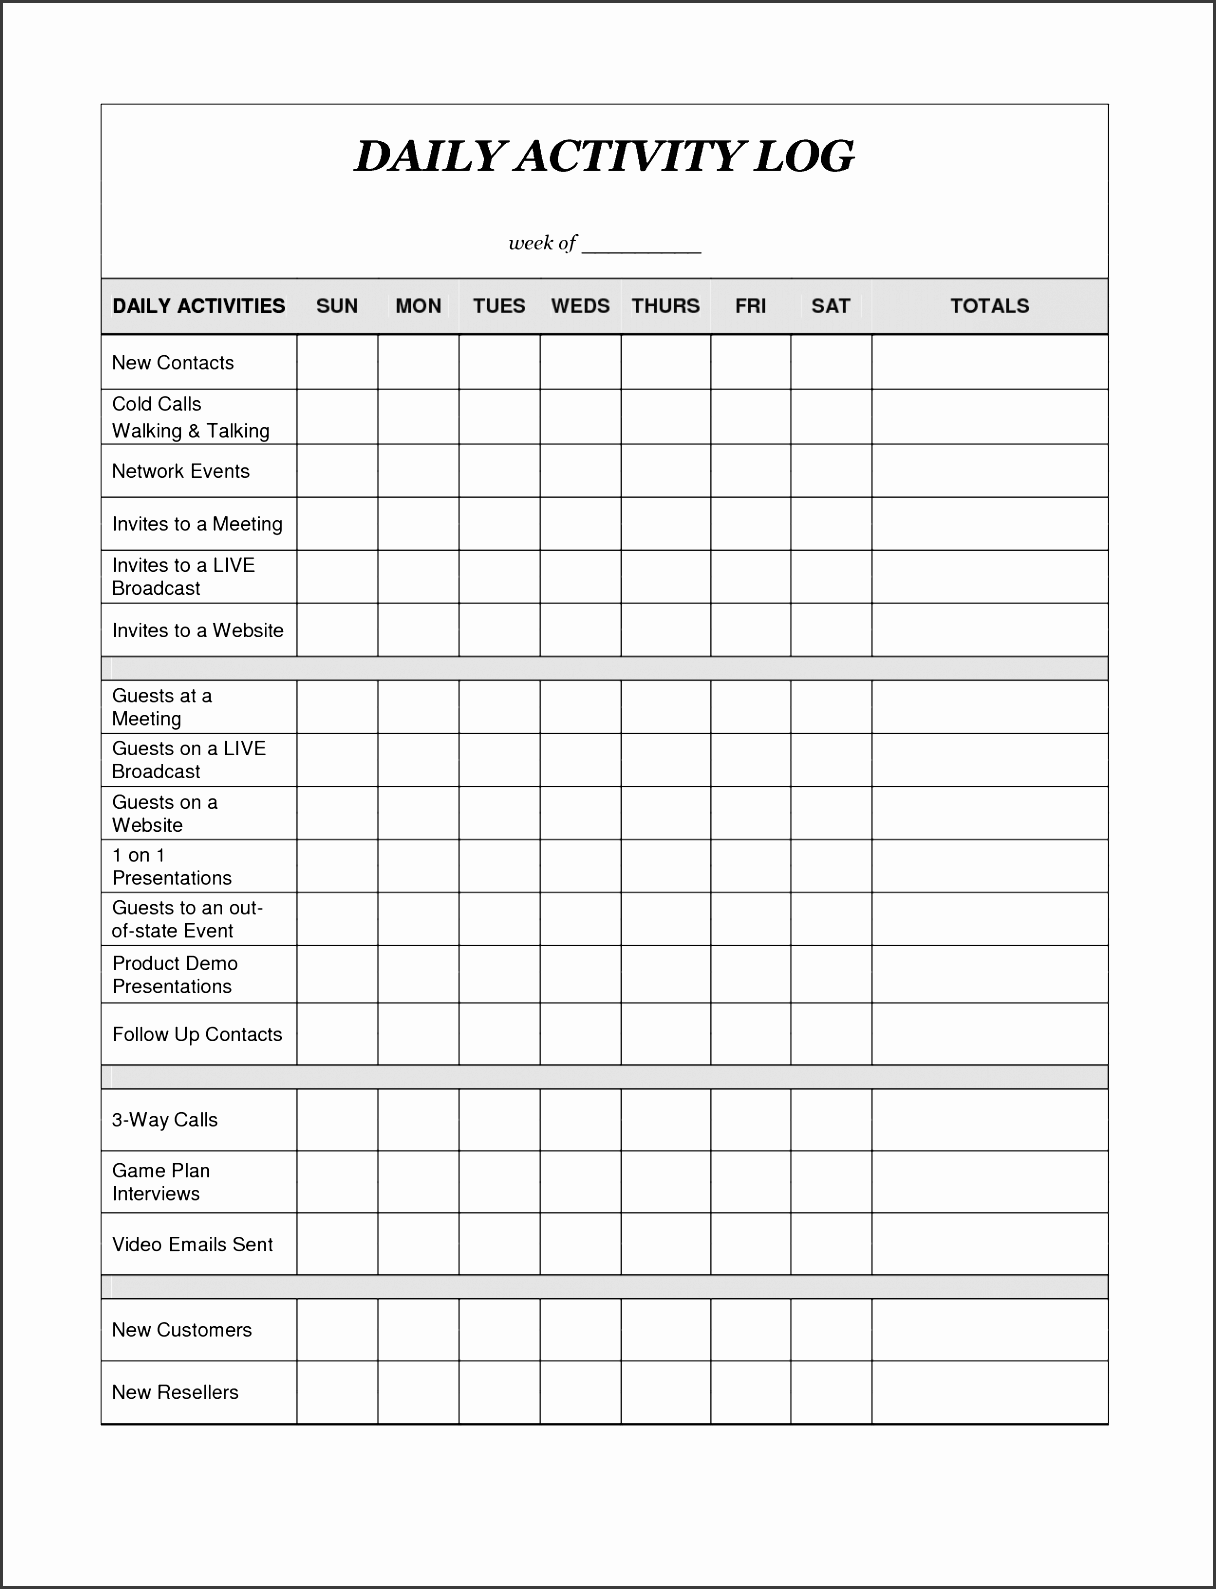 caregiver-daily-checklist-template